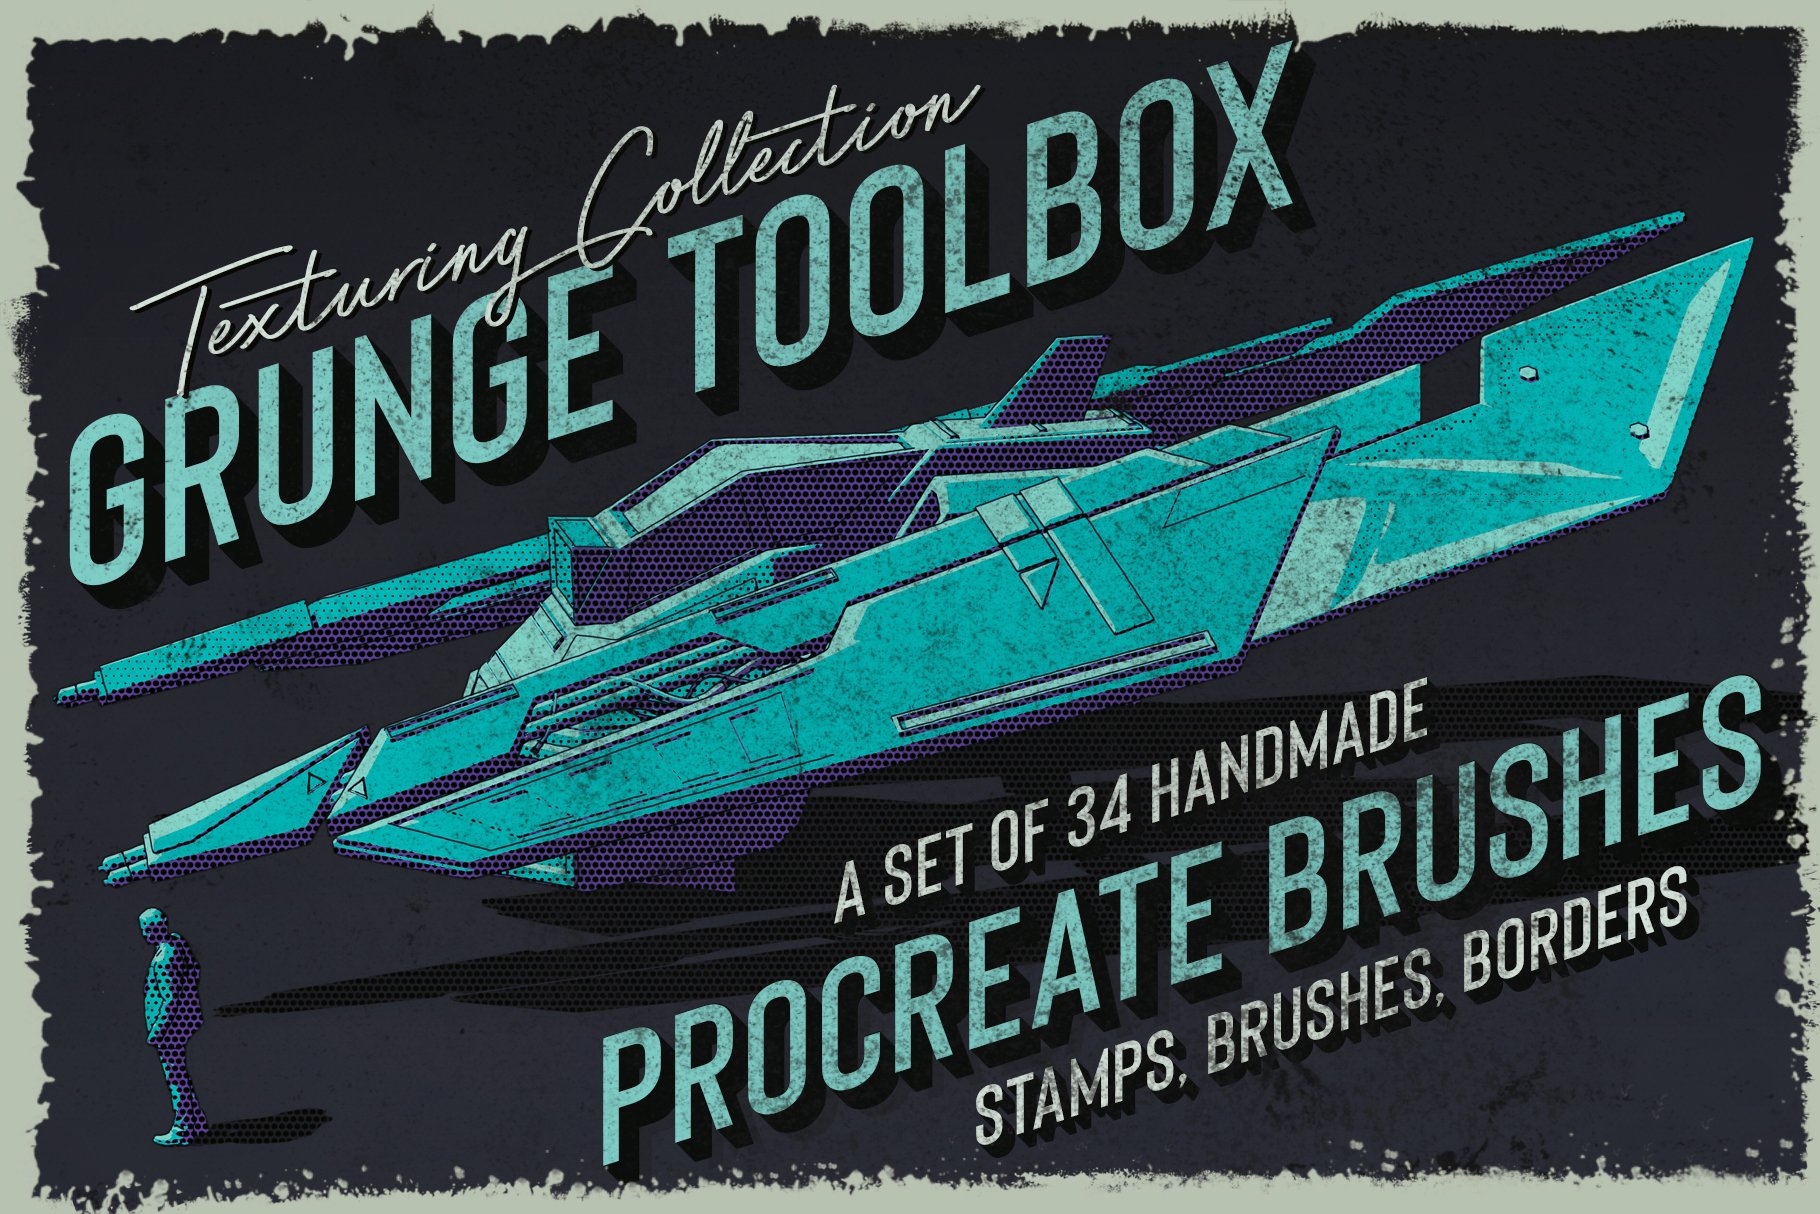 Grunge Toolbox Procreate 画笔 Procreate笔刷iPad垃圾刷纹理画笔插图